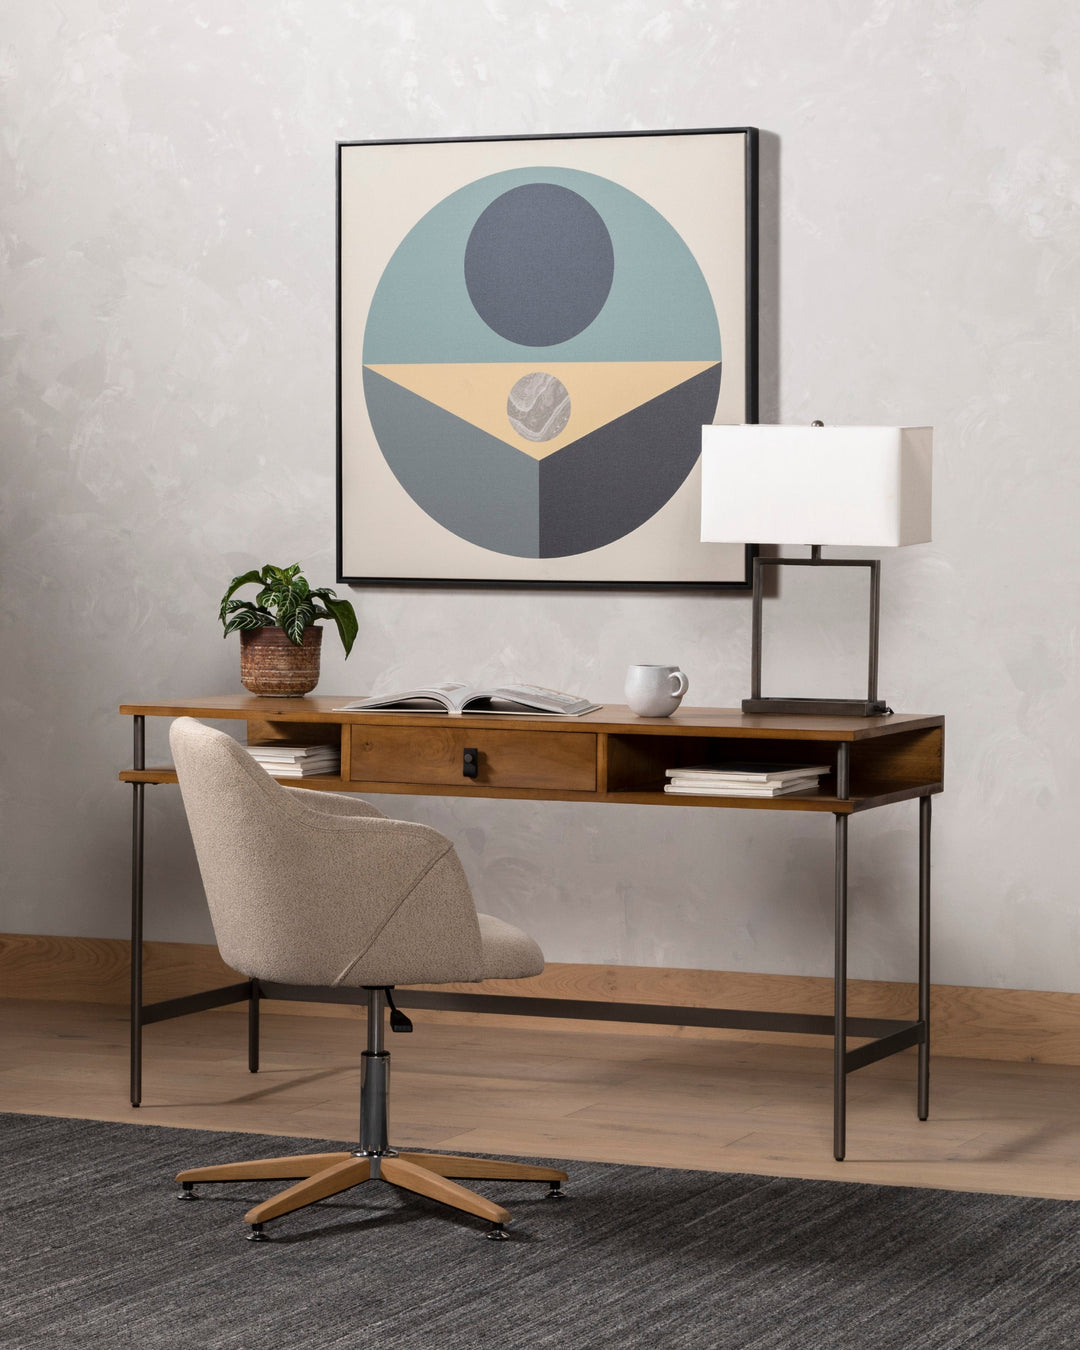 Vesuvi Desk Chair - Fedora Oatmeal